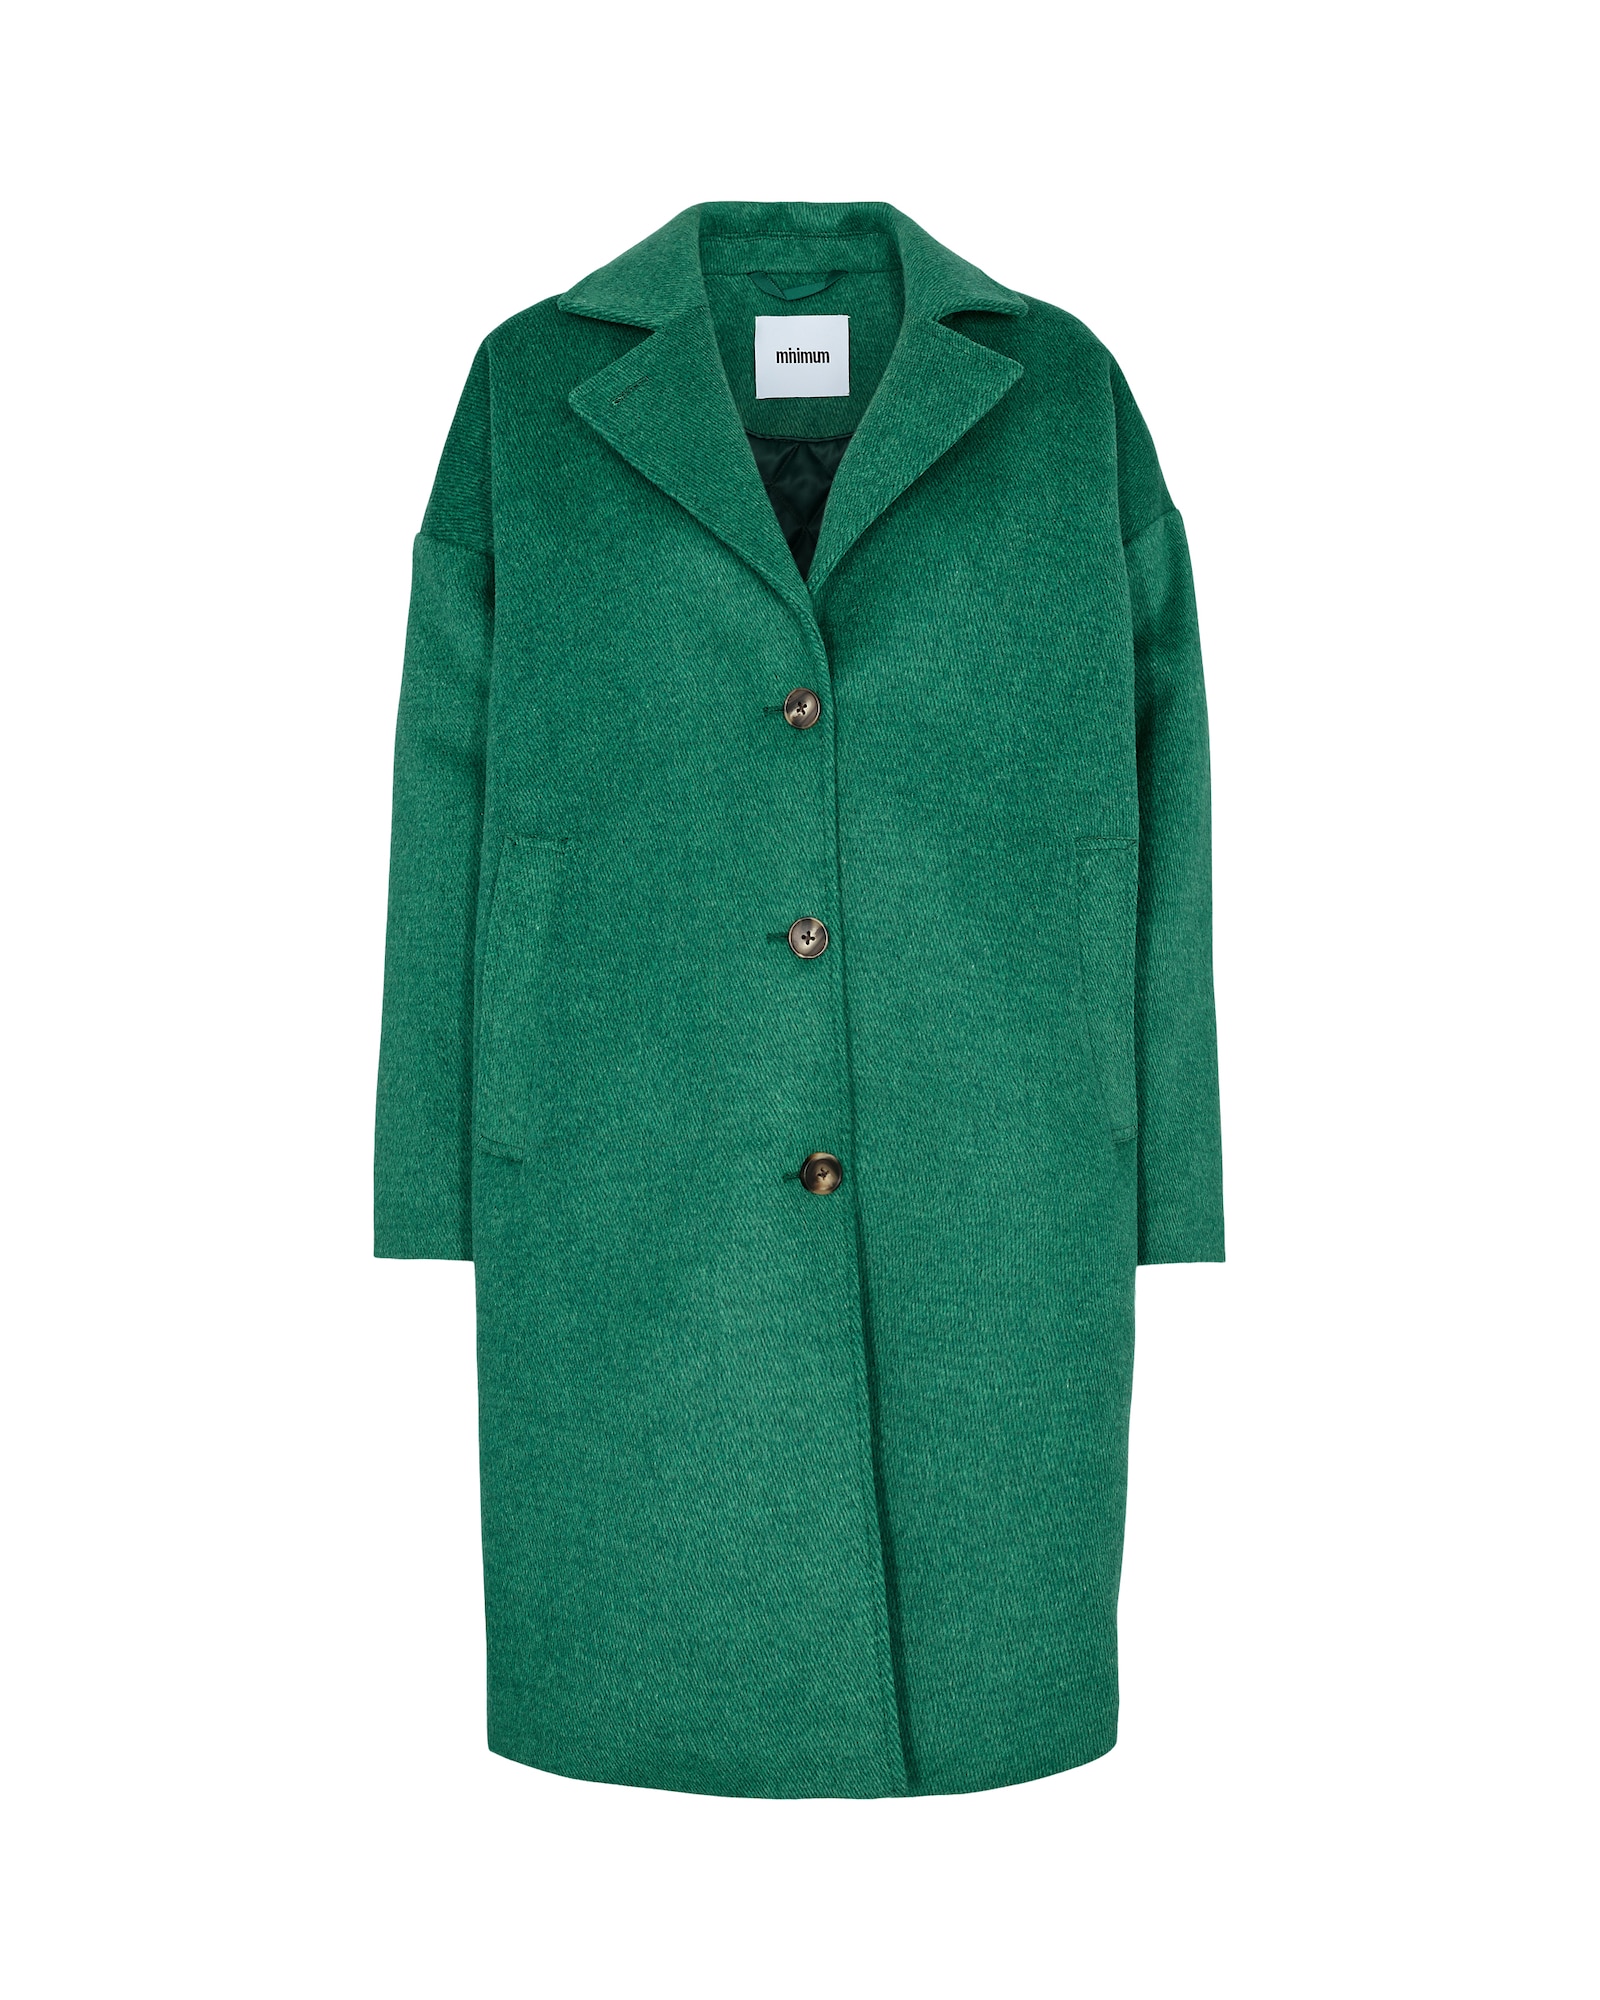 minimum Demisezoninis paltas 'Gutha' žalia / mėtų spalva